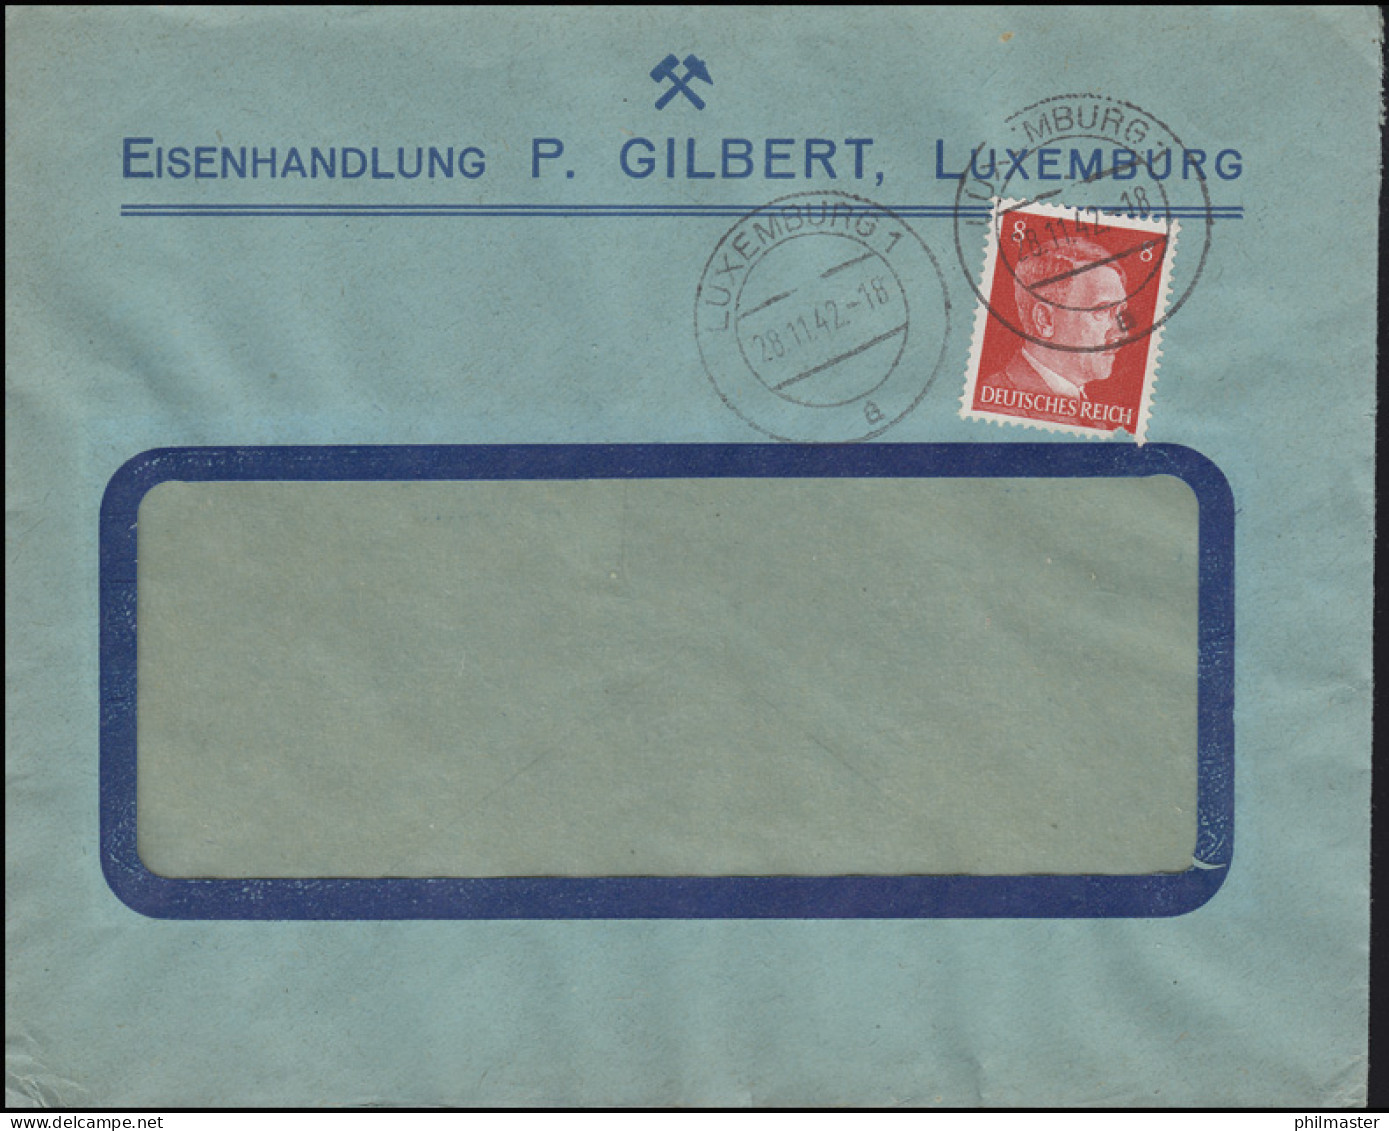 Freimarke Hitler 8 Pf. Fensterbrief Eisenhandlung Gilbert LUXEMBURG 28.11.42 - Fabbriche E Imprese